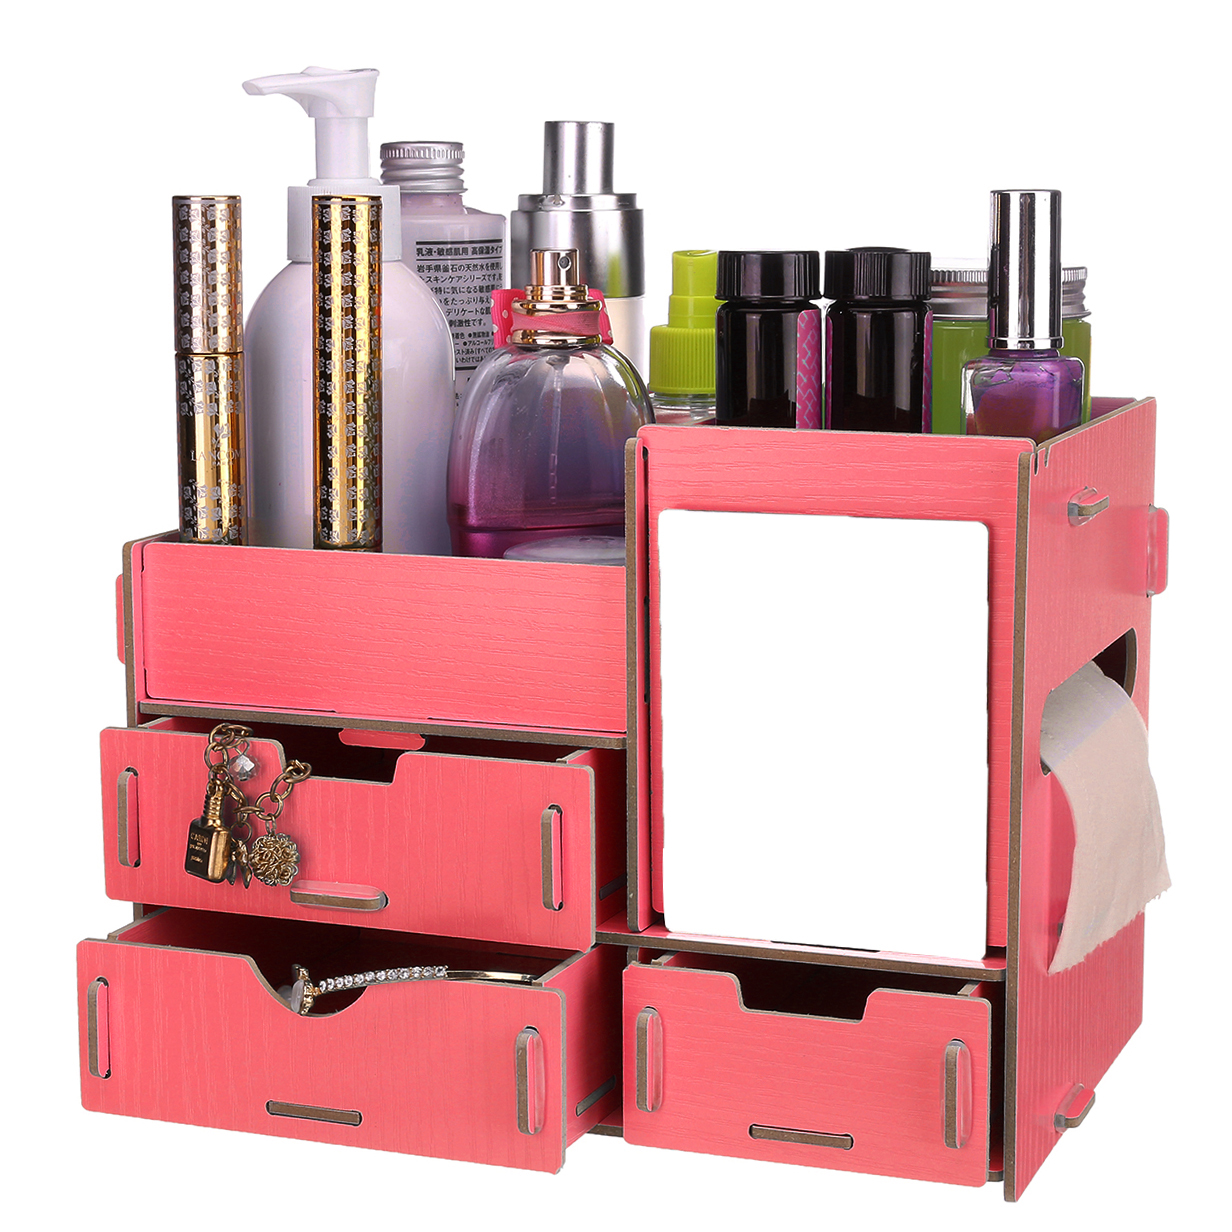 Makeup-Organizer-with-Mirror-Drawer-DIY-Desktop-Creative-Wooden-Storage-Box-Home-Dormitory-Desktop-S-1758574-13